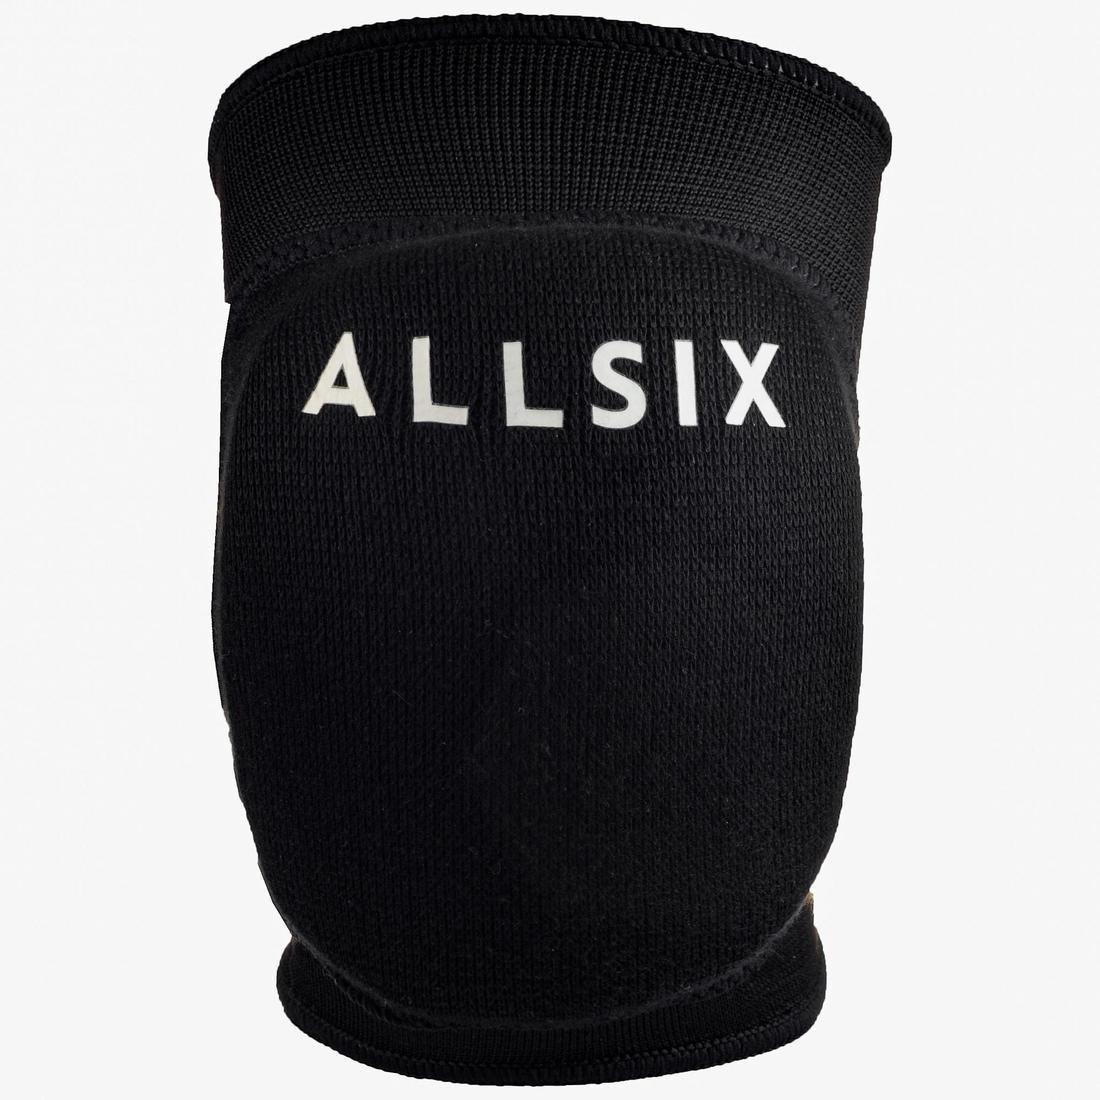 ALLSIX - Volleyball Knee Pads VKP100, Black